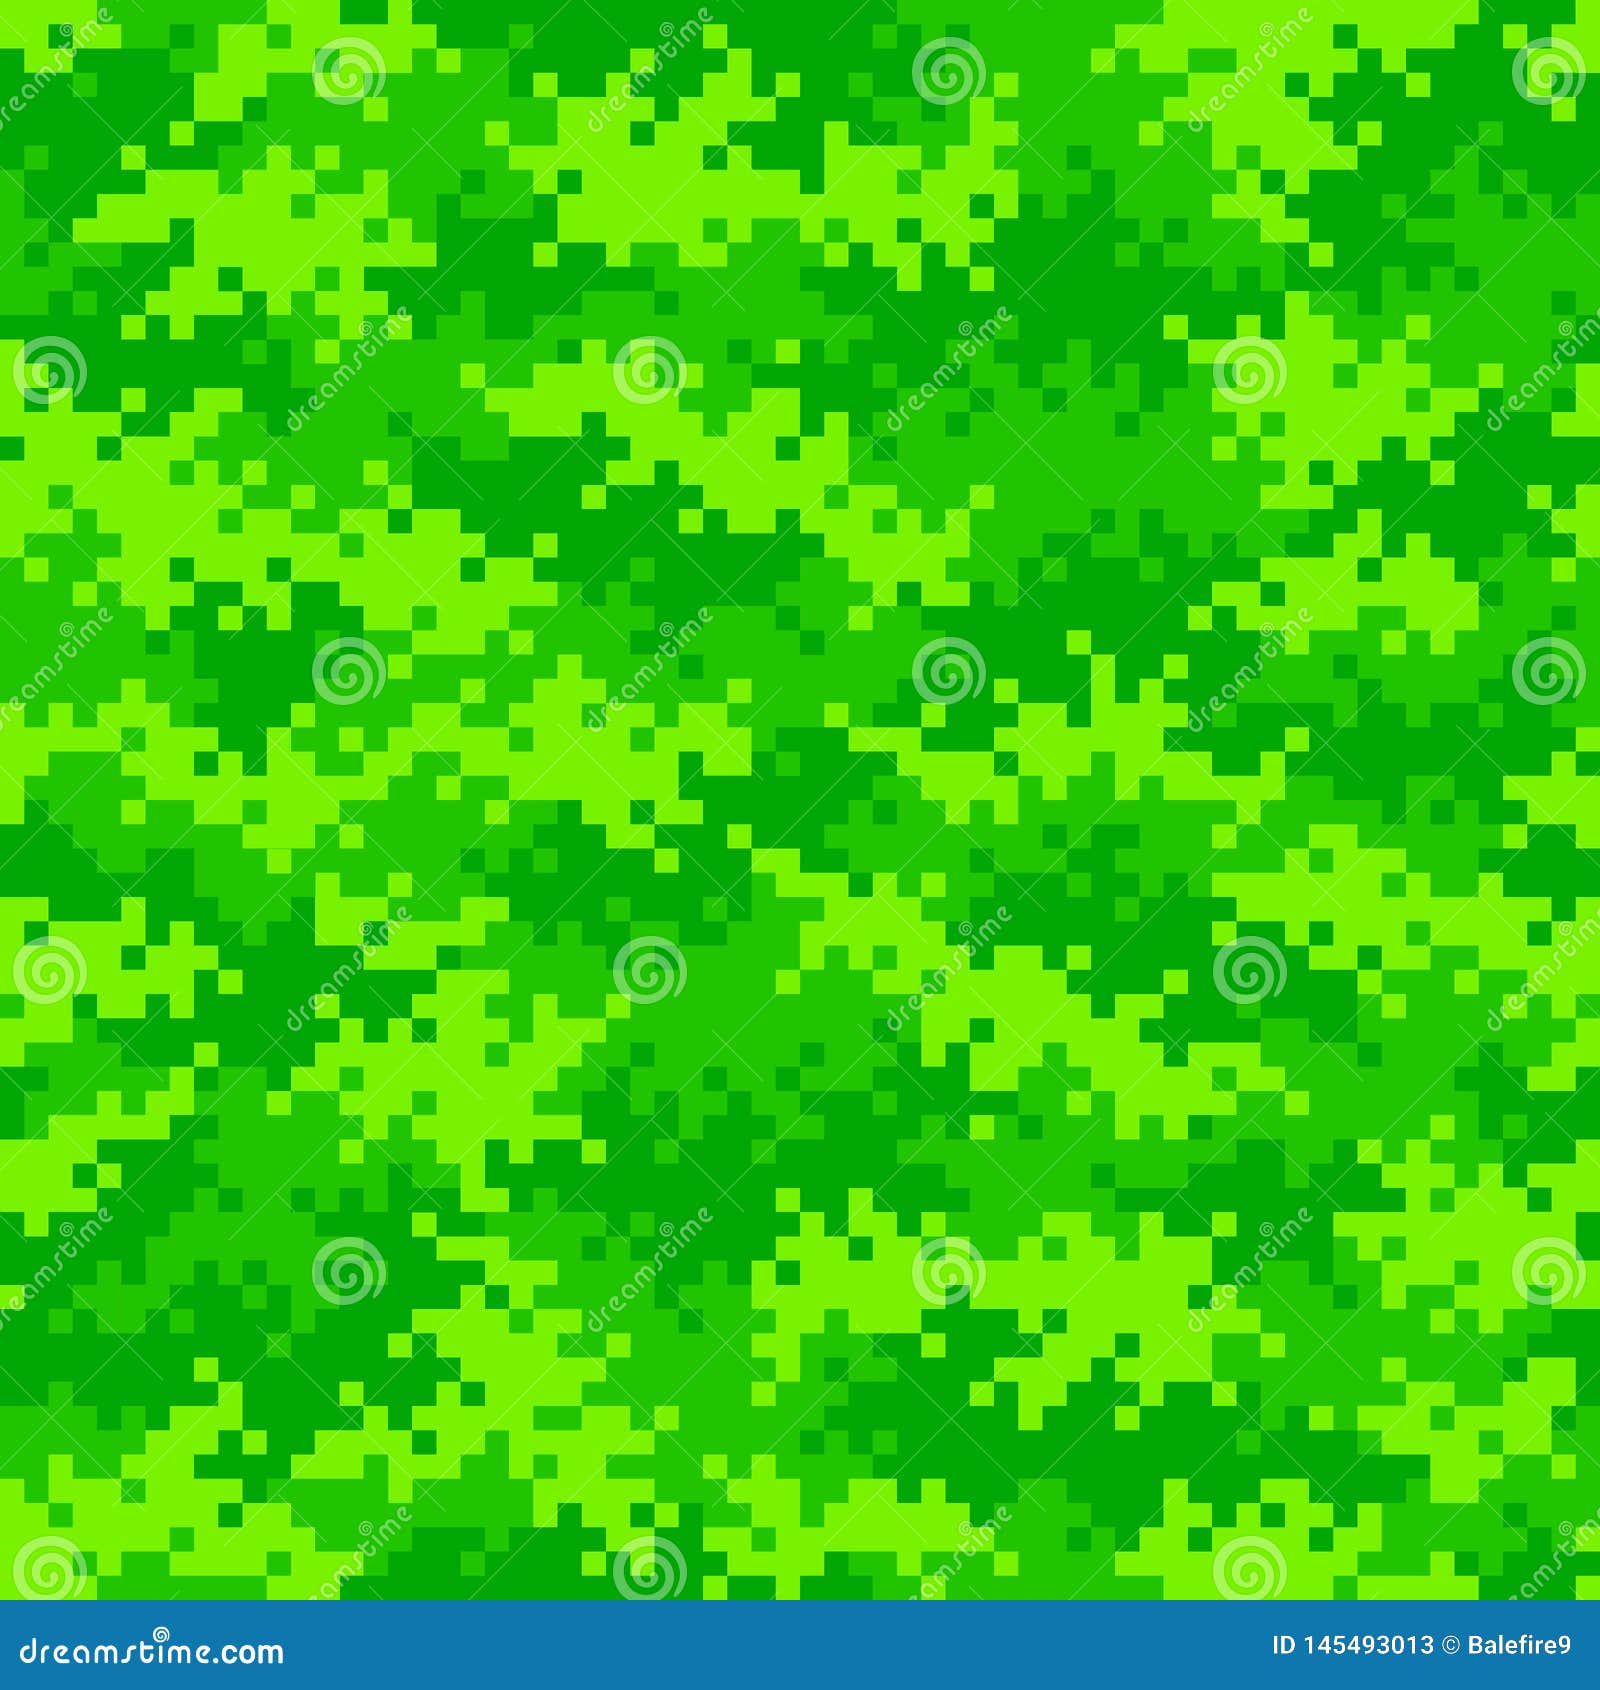 neon green camouflage pixel pattern seamlessly tileable